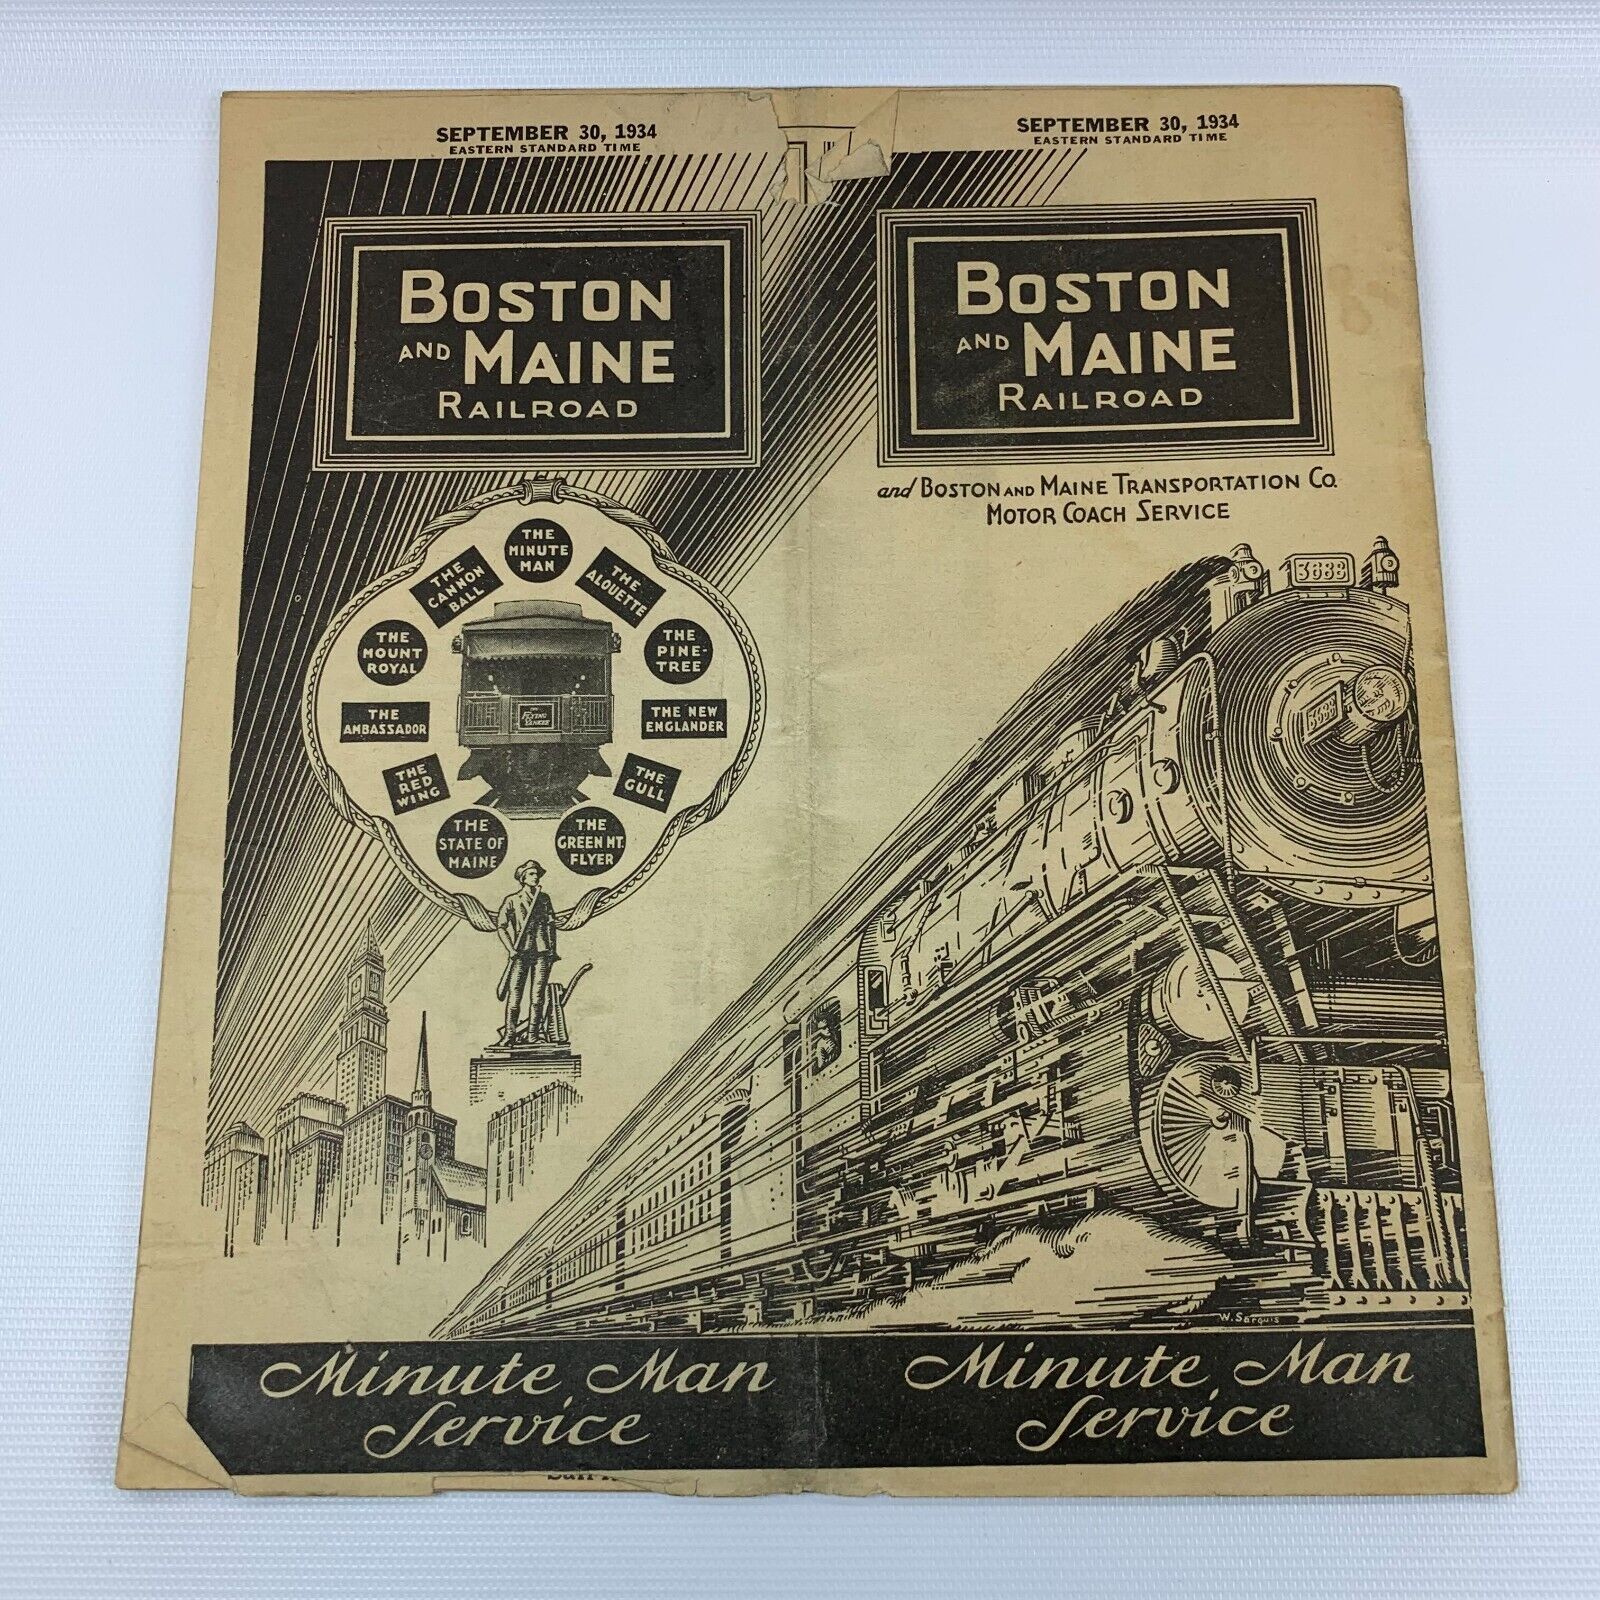 1934 Boston And Maine Railroad Transportation Timetable Minute Man Service